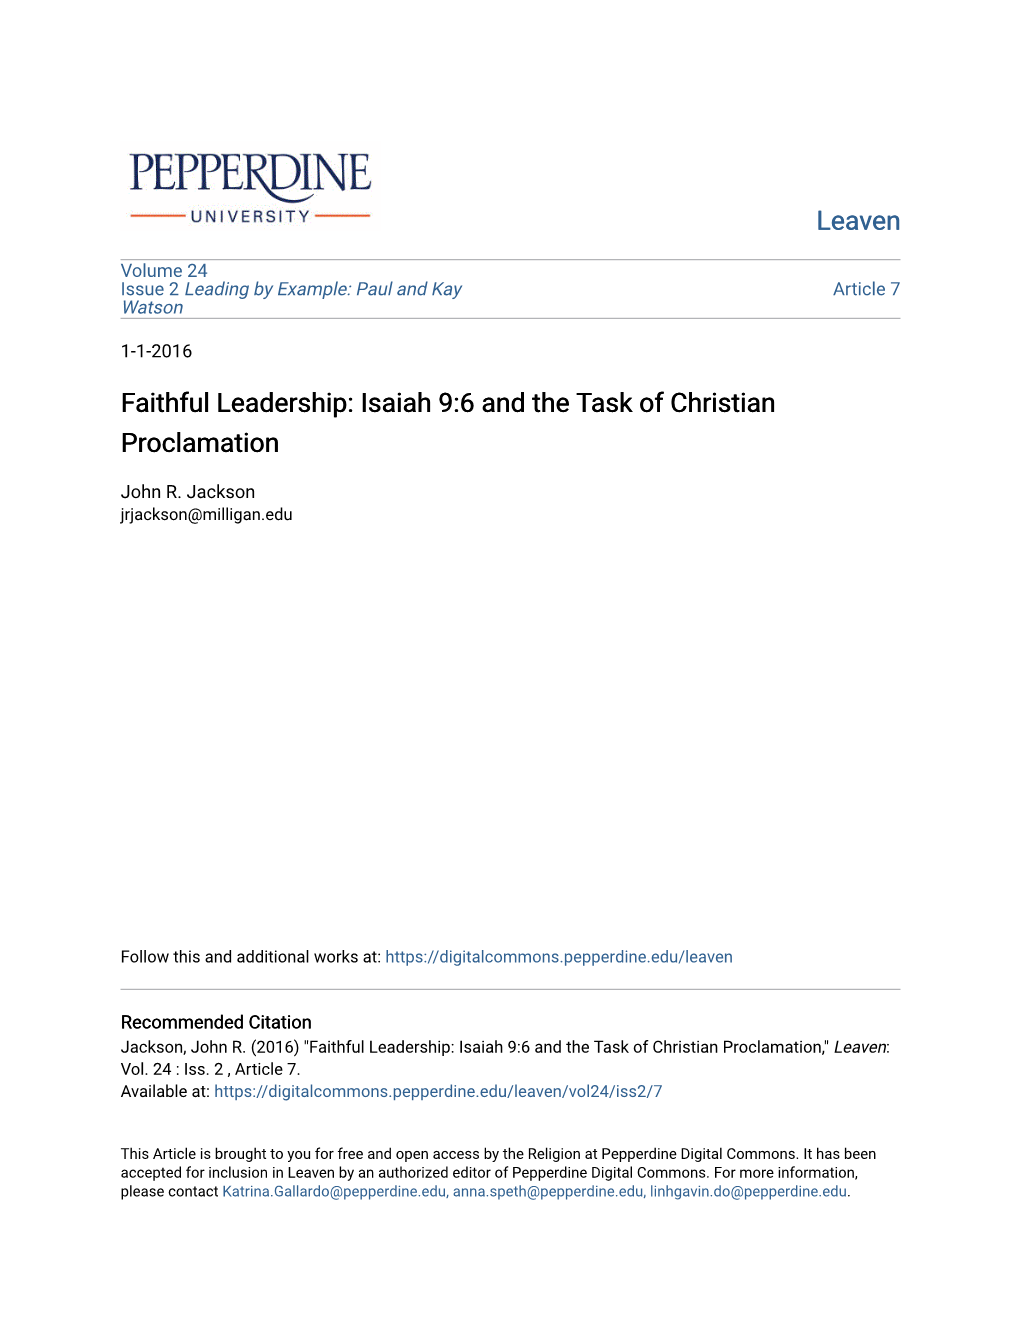 Faithful Leadership: Isaiah 9:6 and the Task of Christian Proclamation